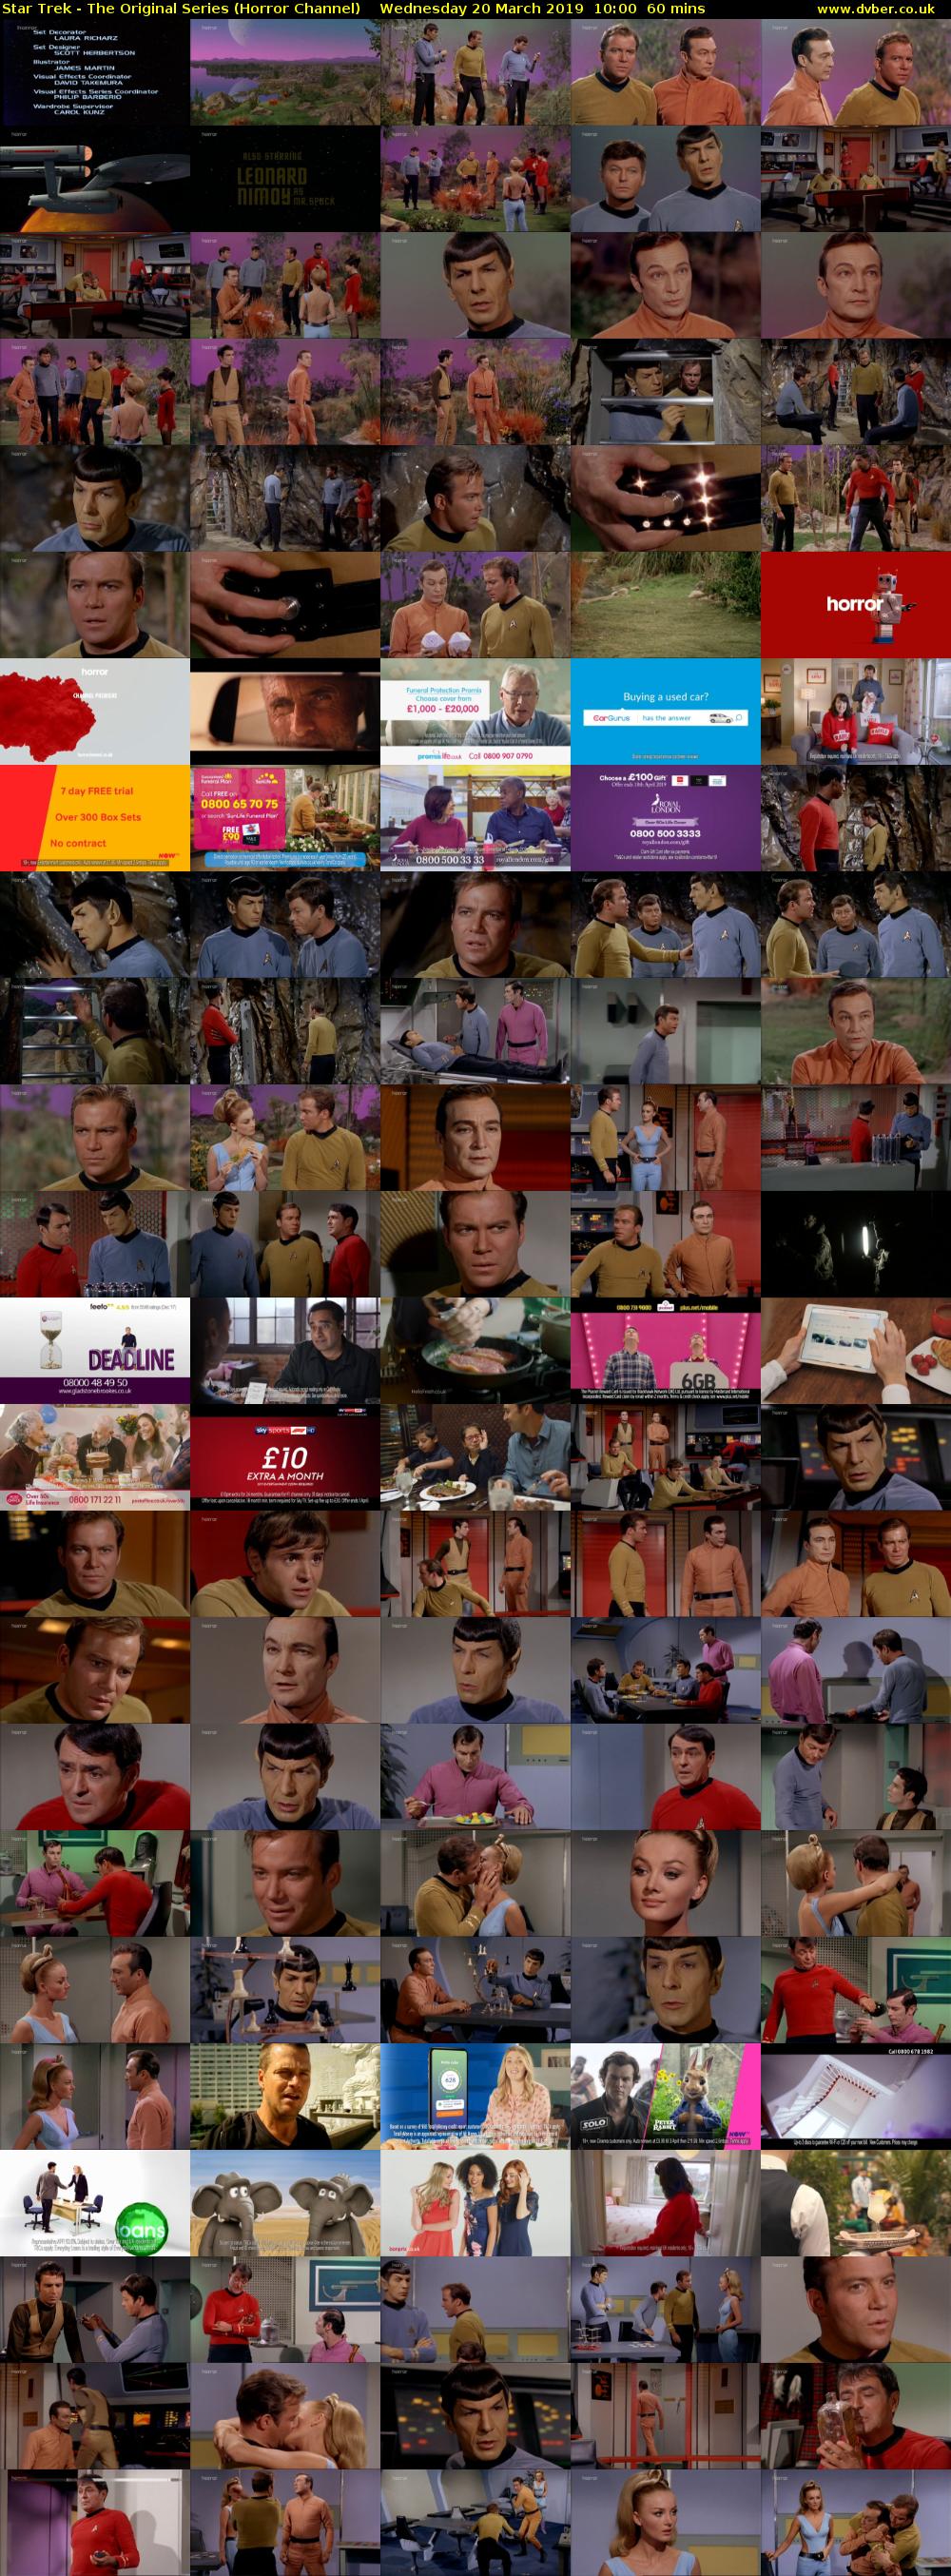 Star Trek - The Original Series (Horror Channel) Wednesday 20 March 2019 10:00 - 11:00